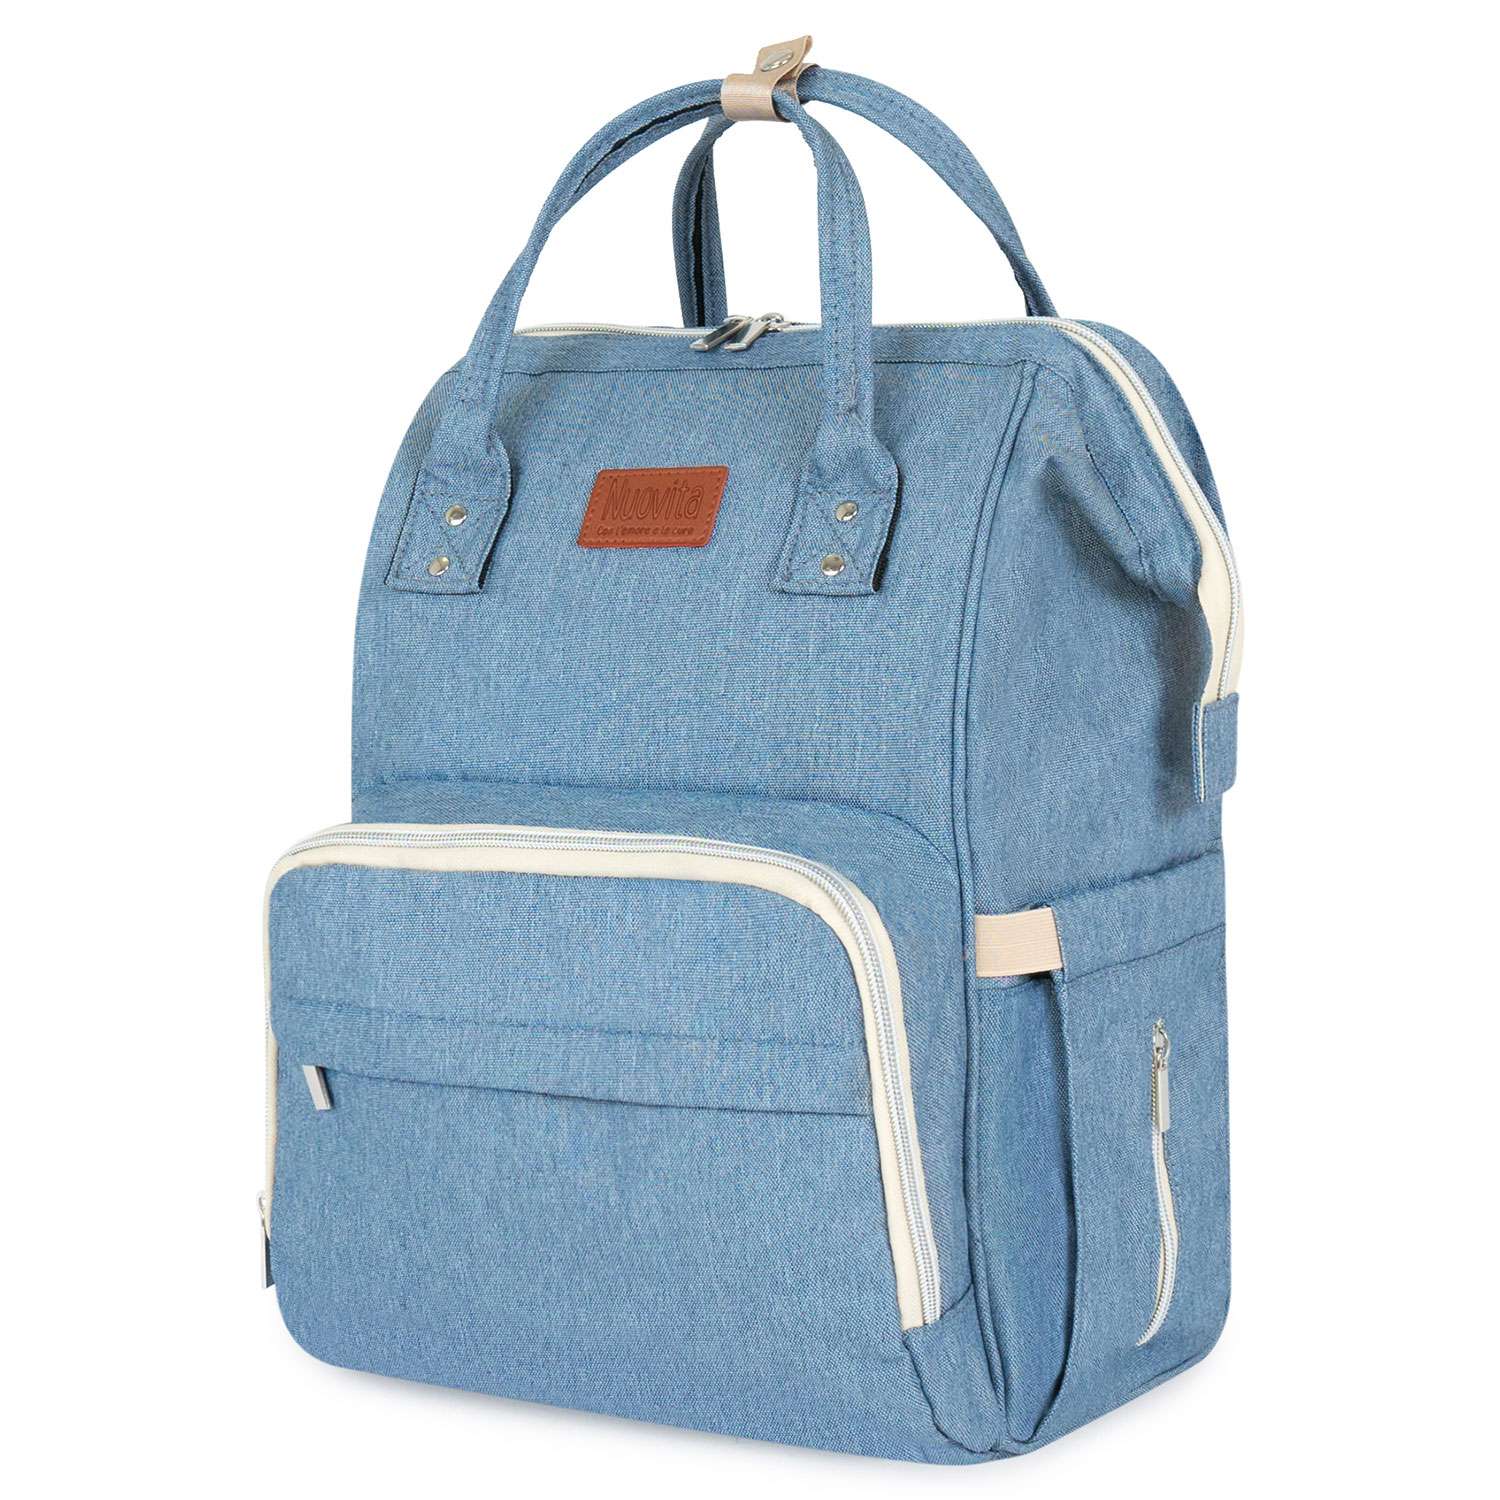 Рюкзак для мамы Nuovita Capcap classic Голубой - фото 1